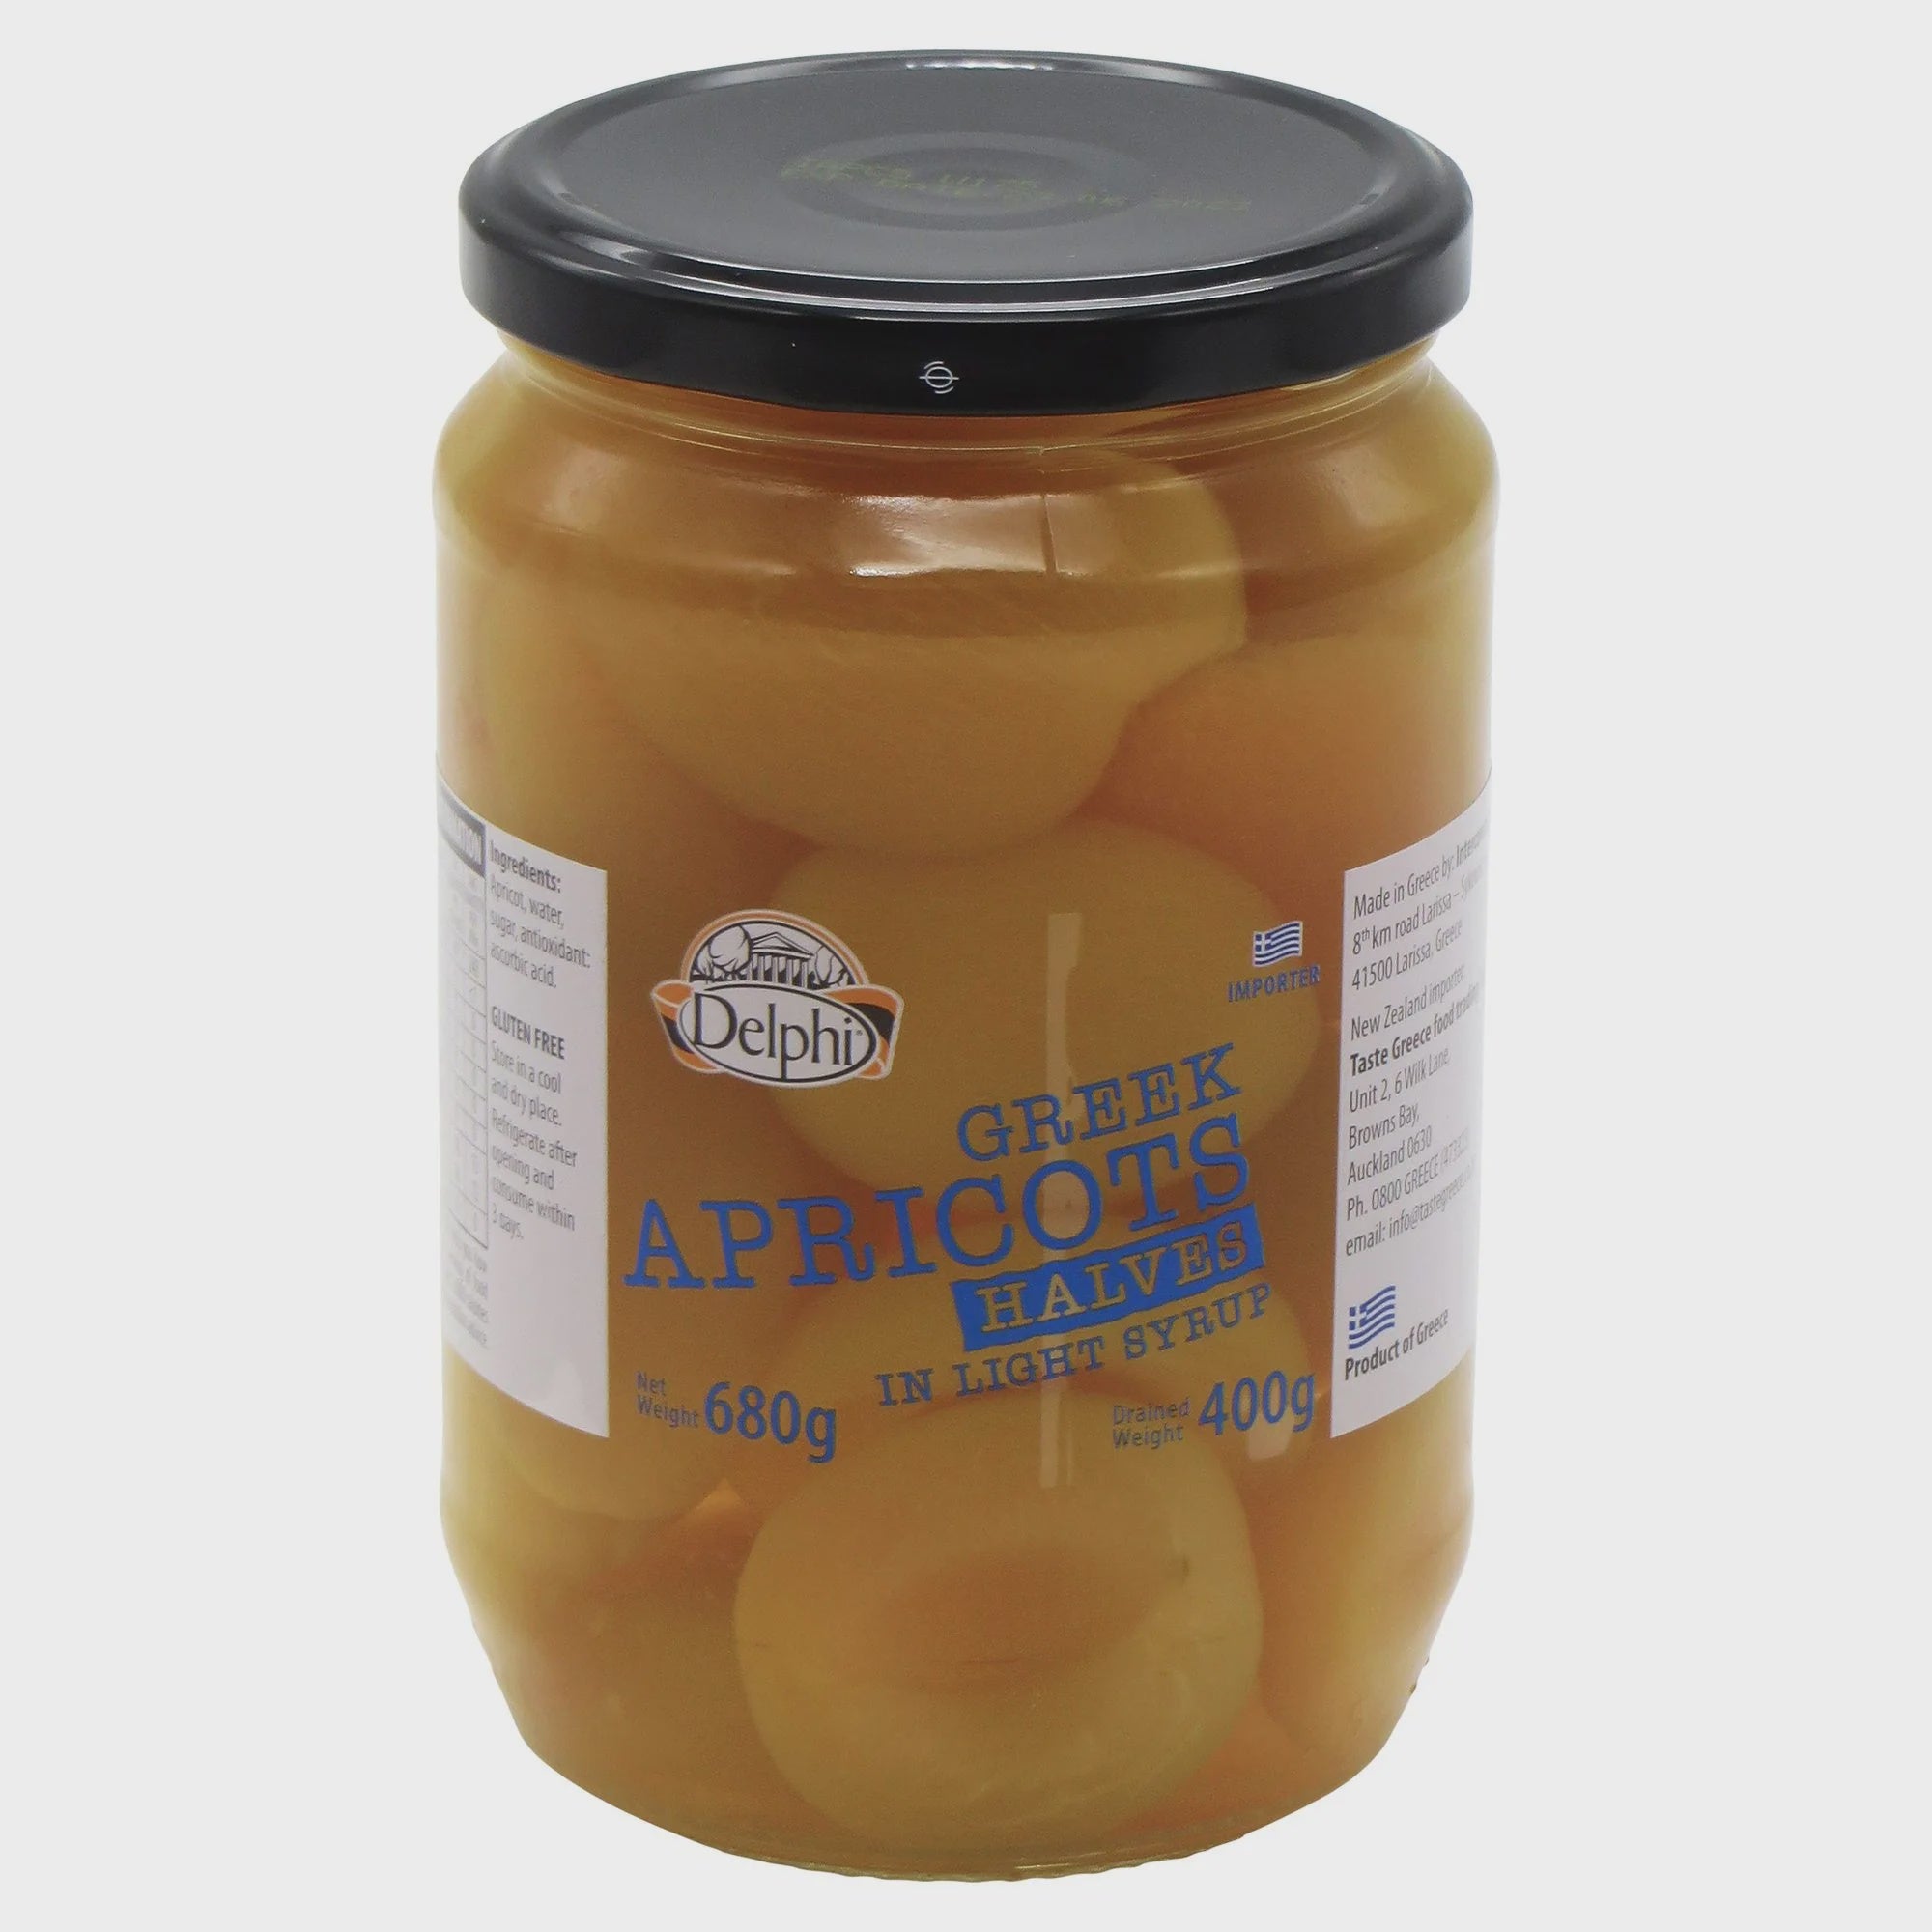 Delphi Greek Apricot Halves in light syrup 400g